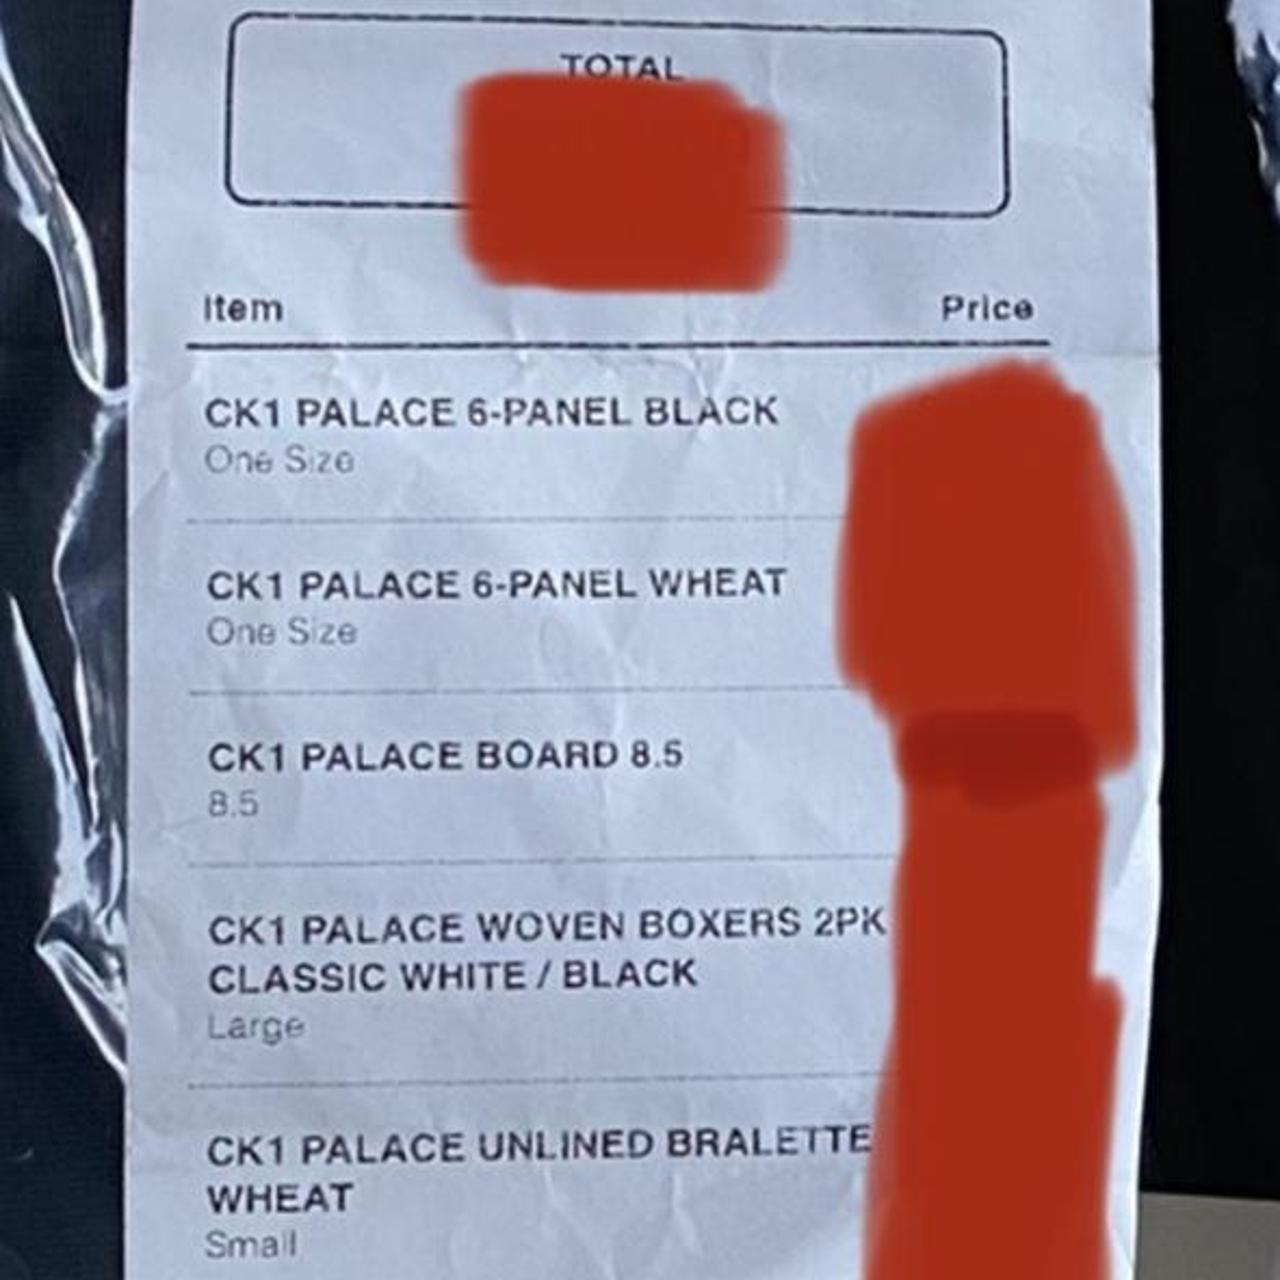 CK1 PALACE WOVEN BOXERS 2PK CLASSIC WHITE / BLACK